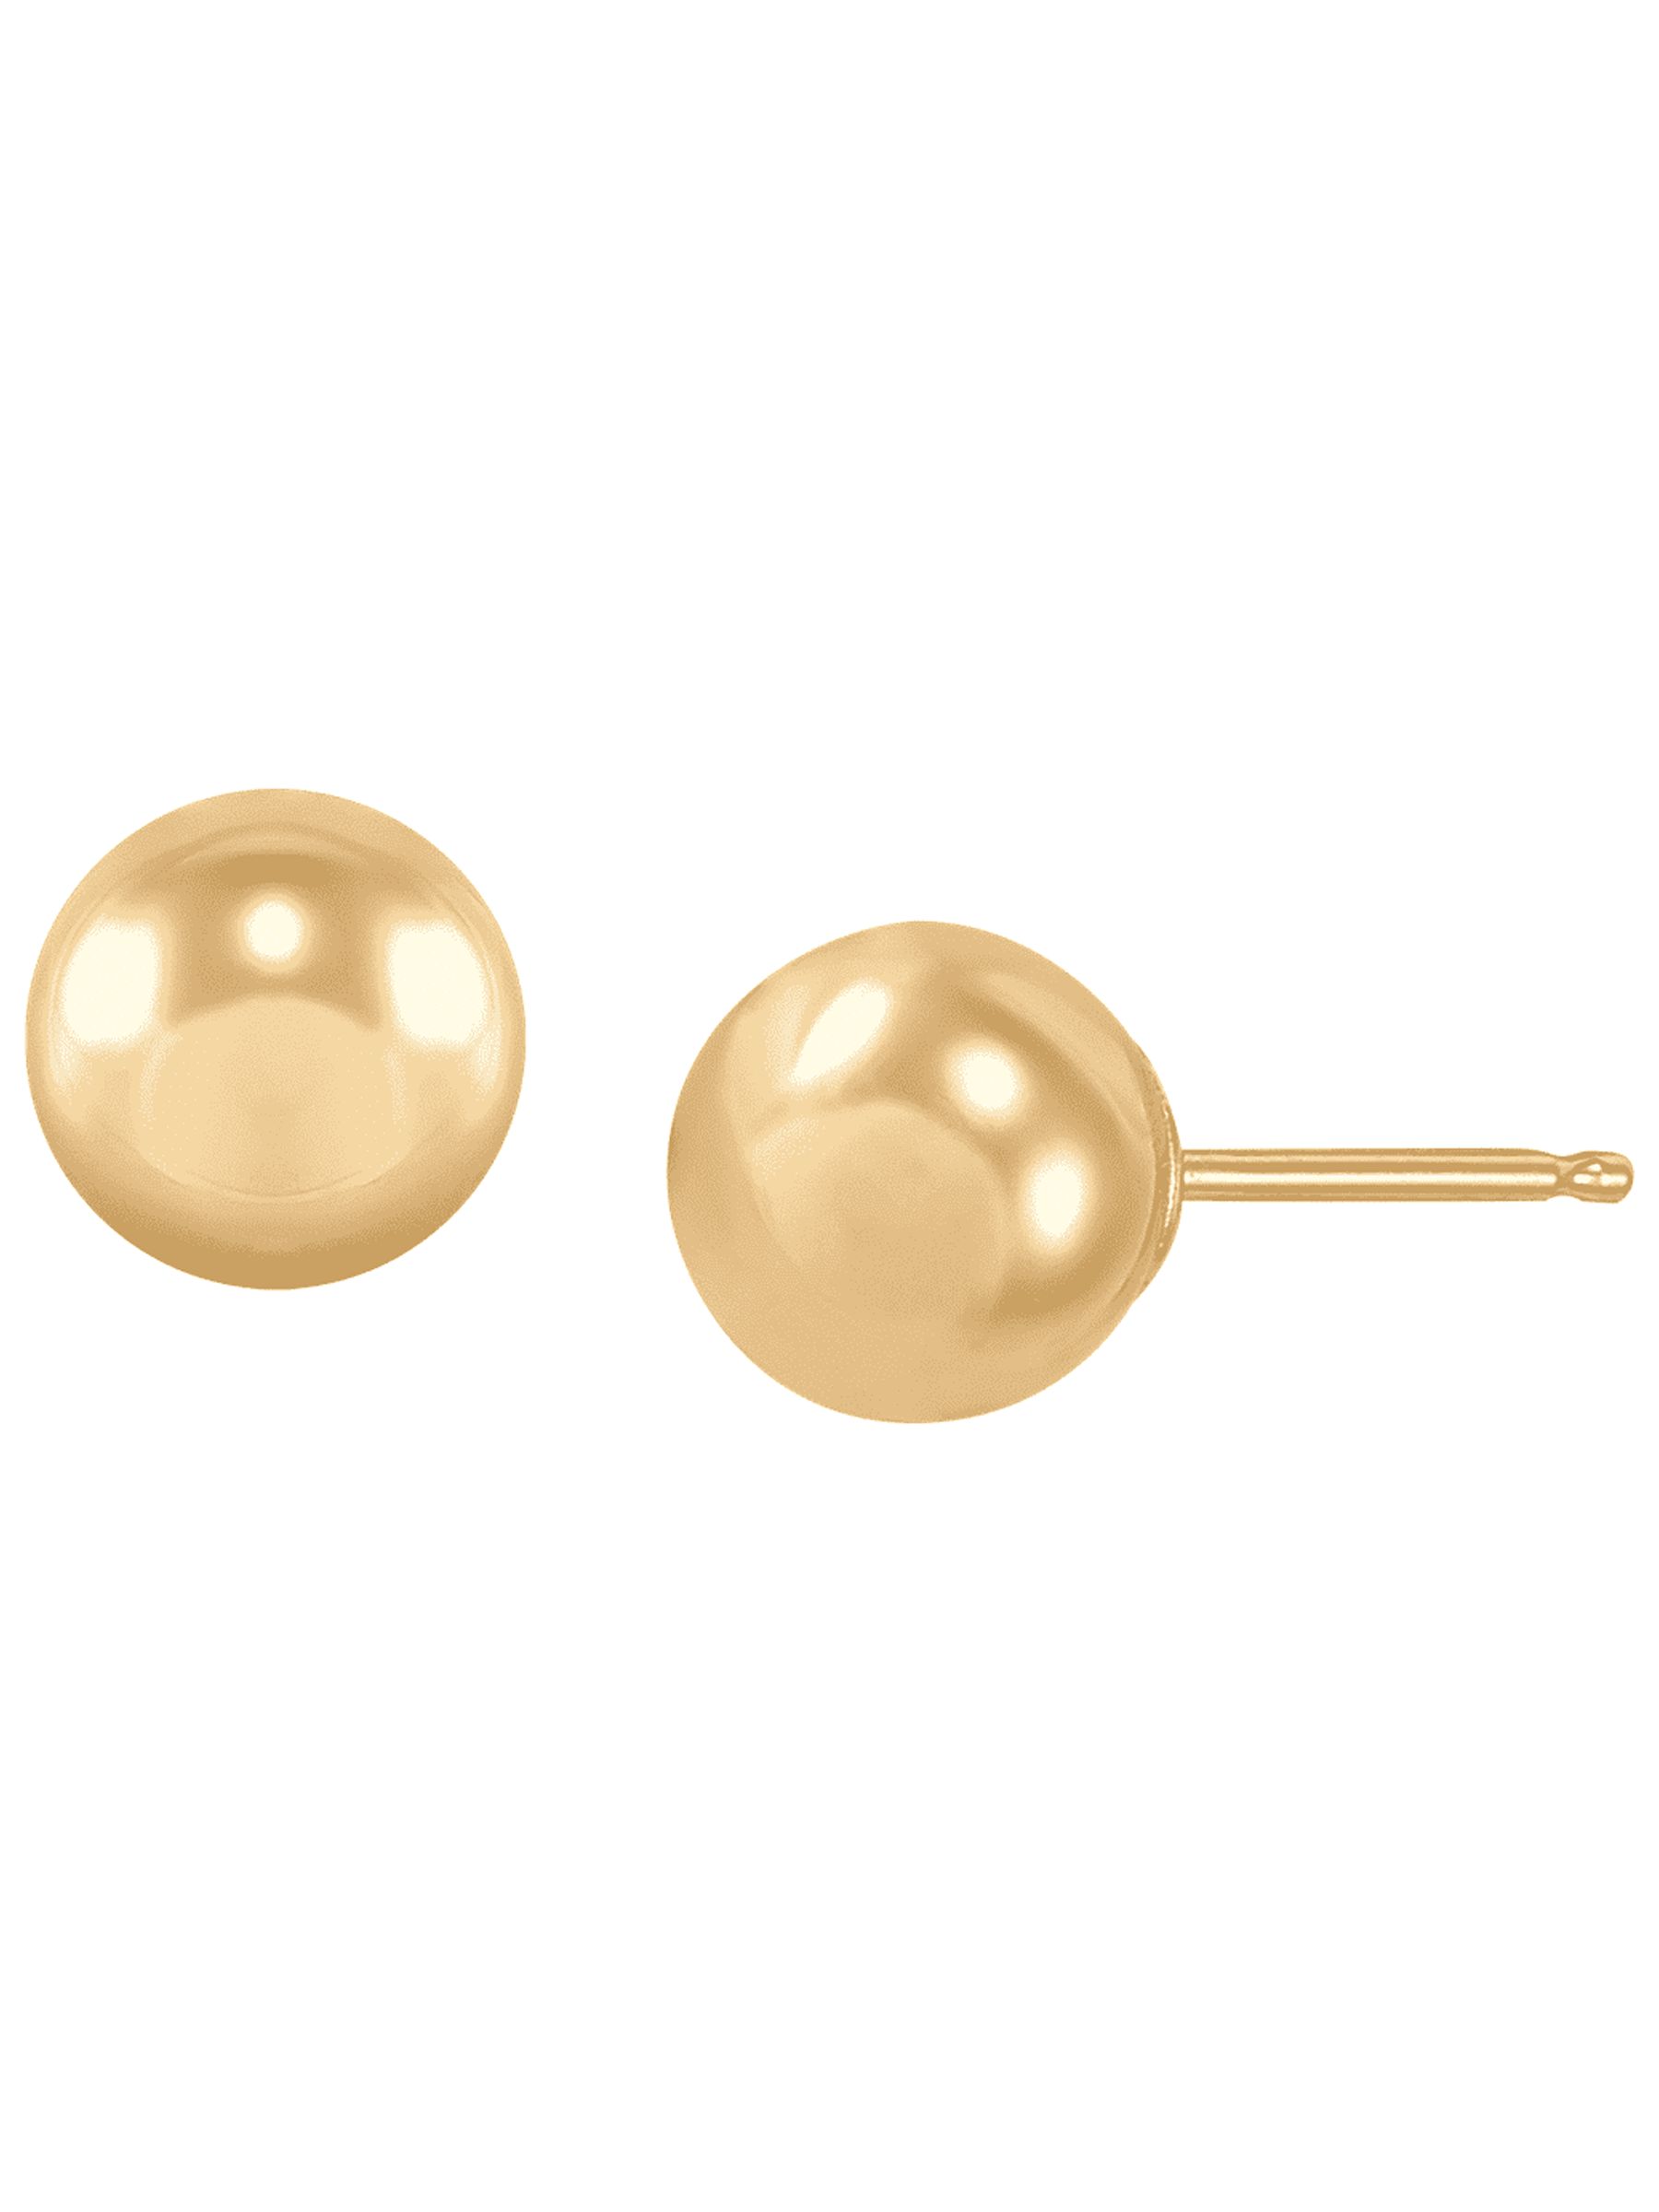 Women's Finecraft 6mm Ball Stud Earrings in 14kt Yellow Gold - image 1 of 5